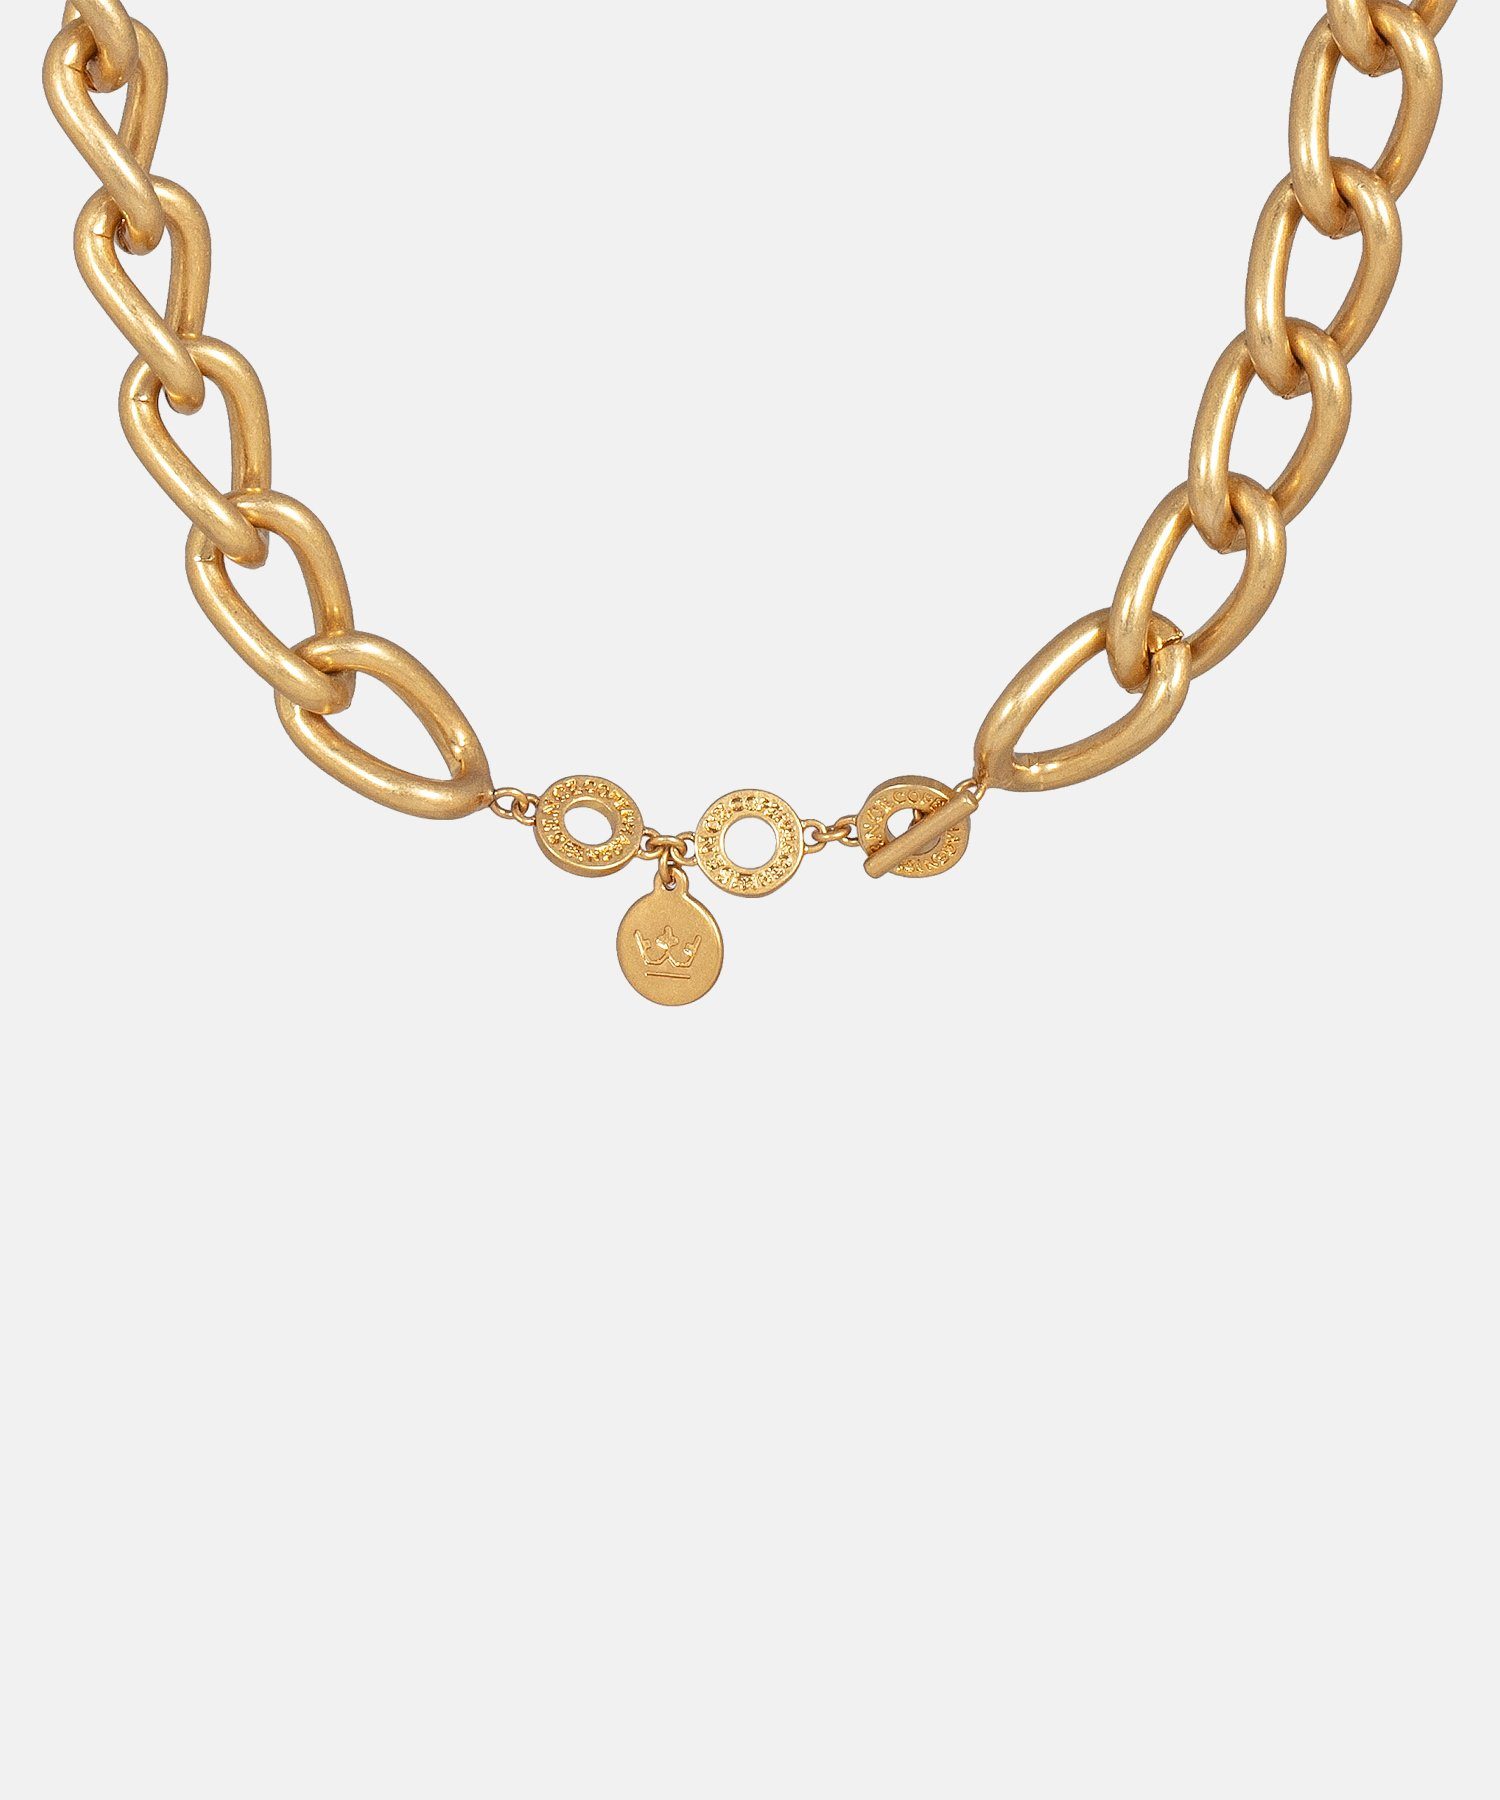 Sence Copenhagen Kette ohne Anhänger Damen Vergoldet - Solar Medium Halskette mit groben Gliedern, 60 cm - Messing vergoldet